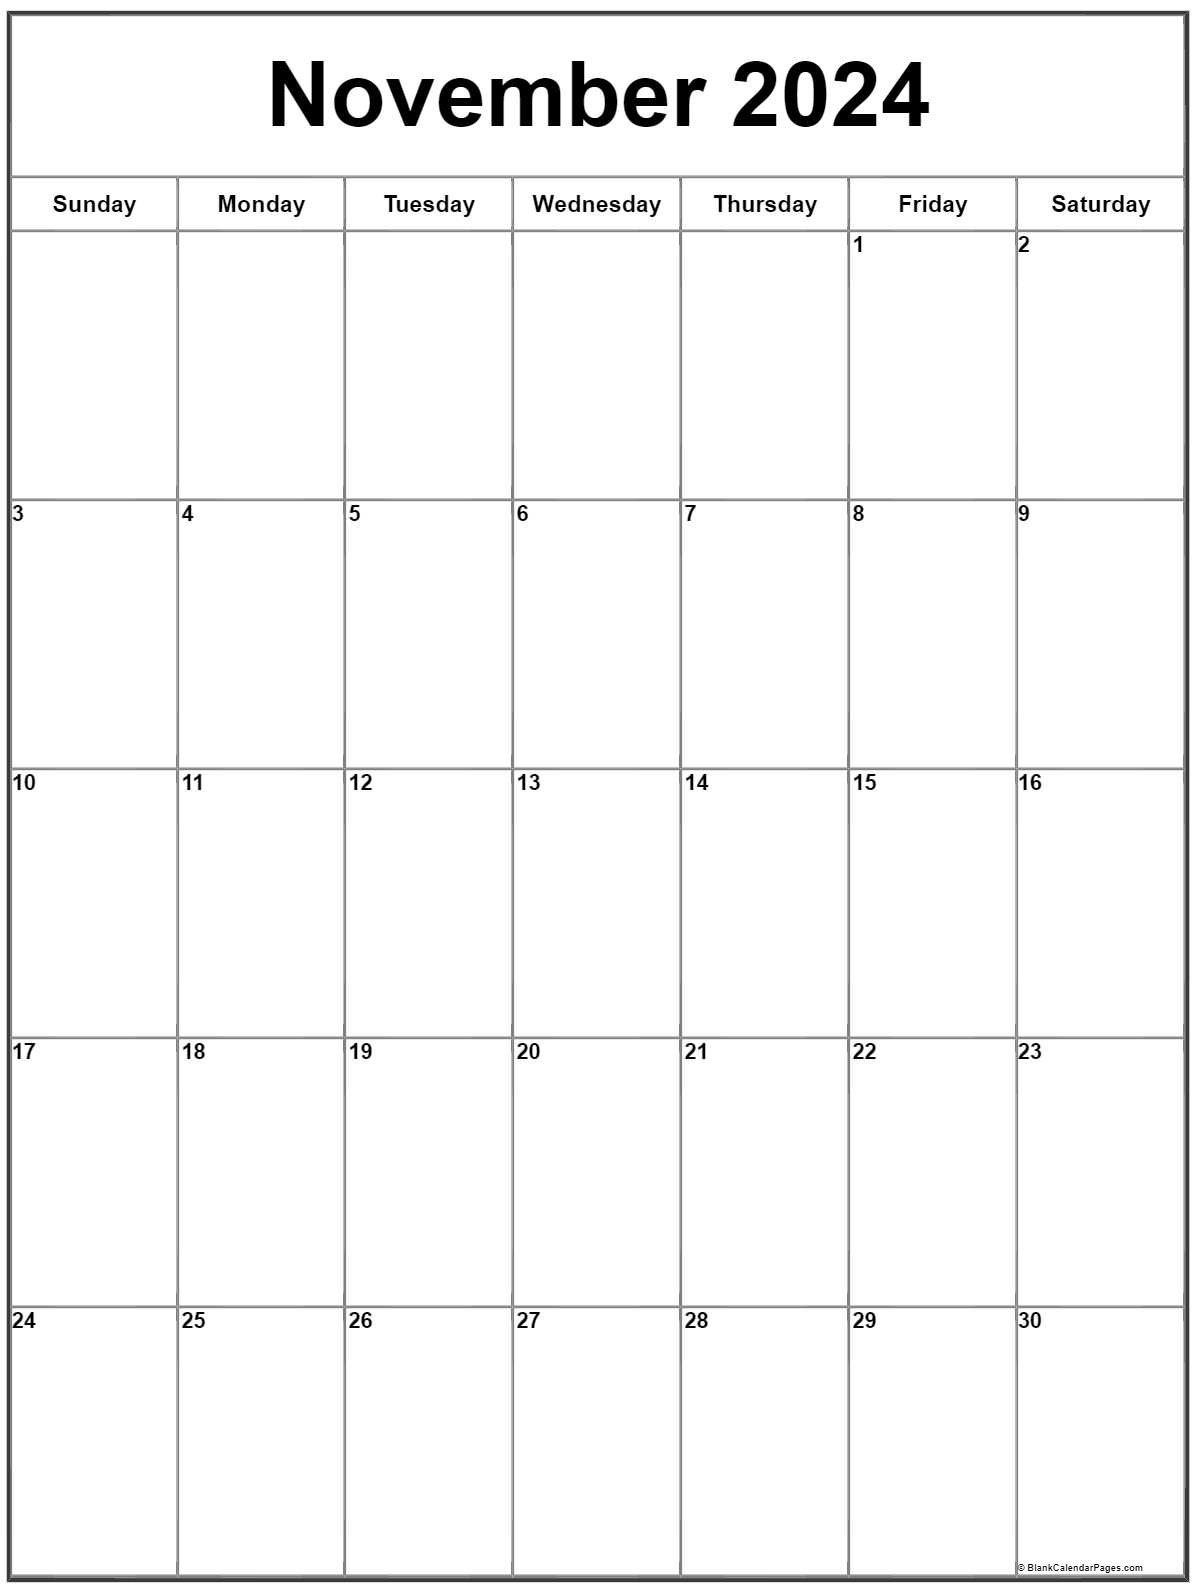 november-2024-vertical-calendar-portrait